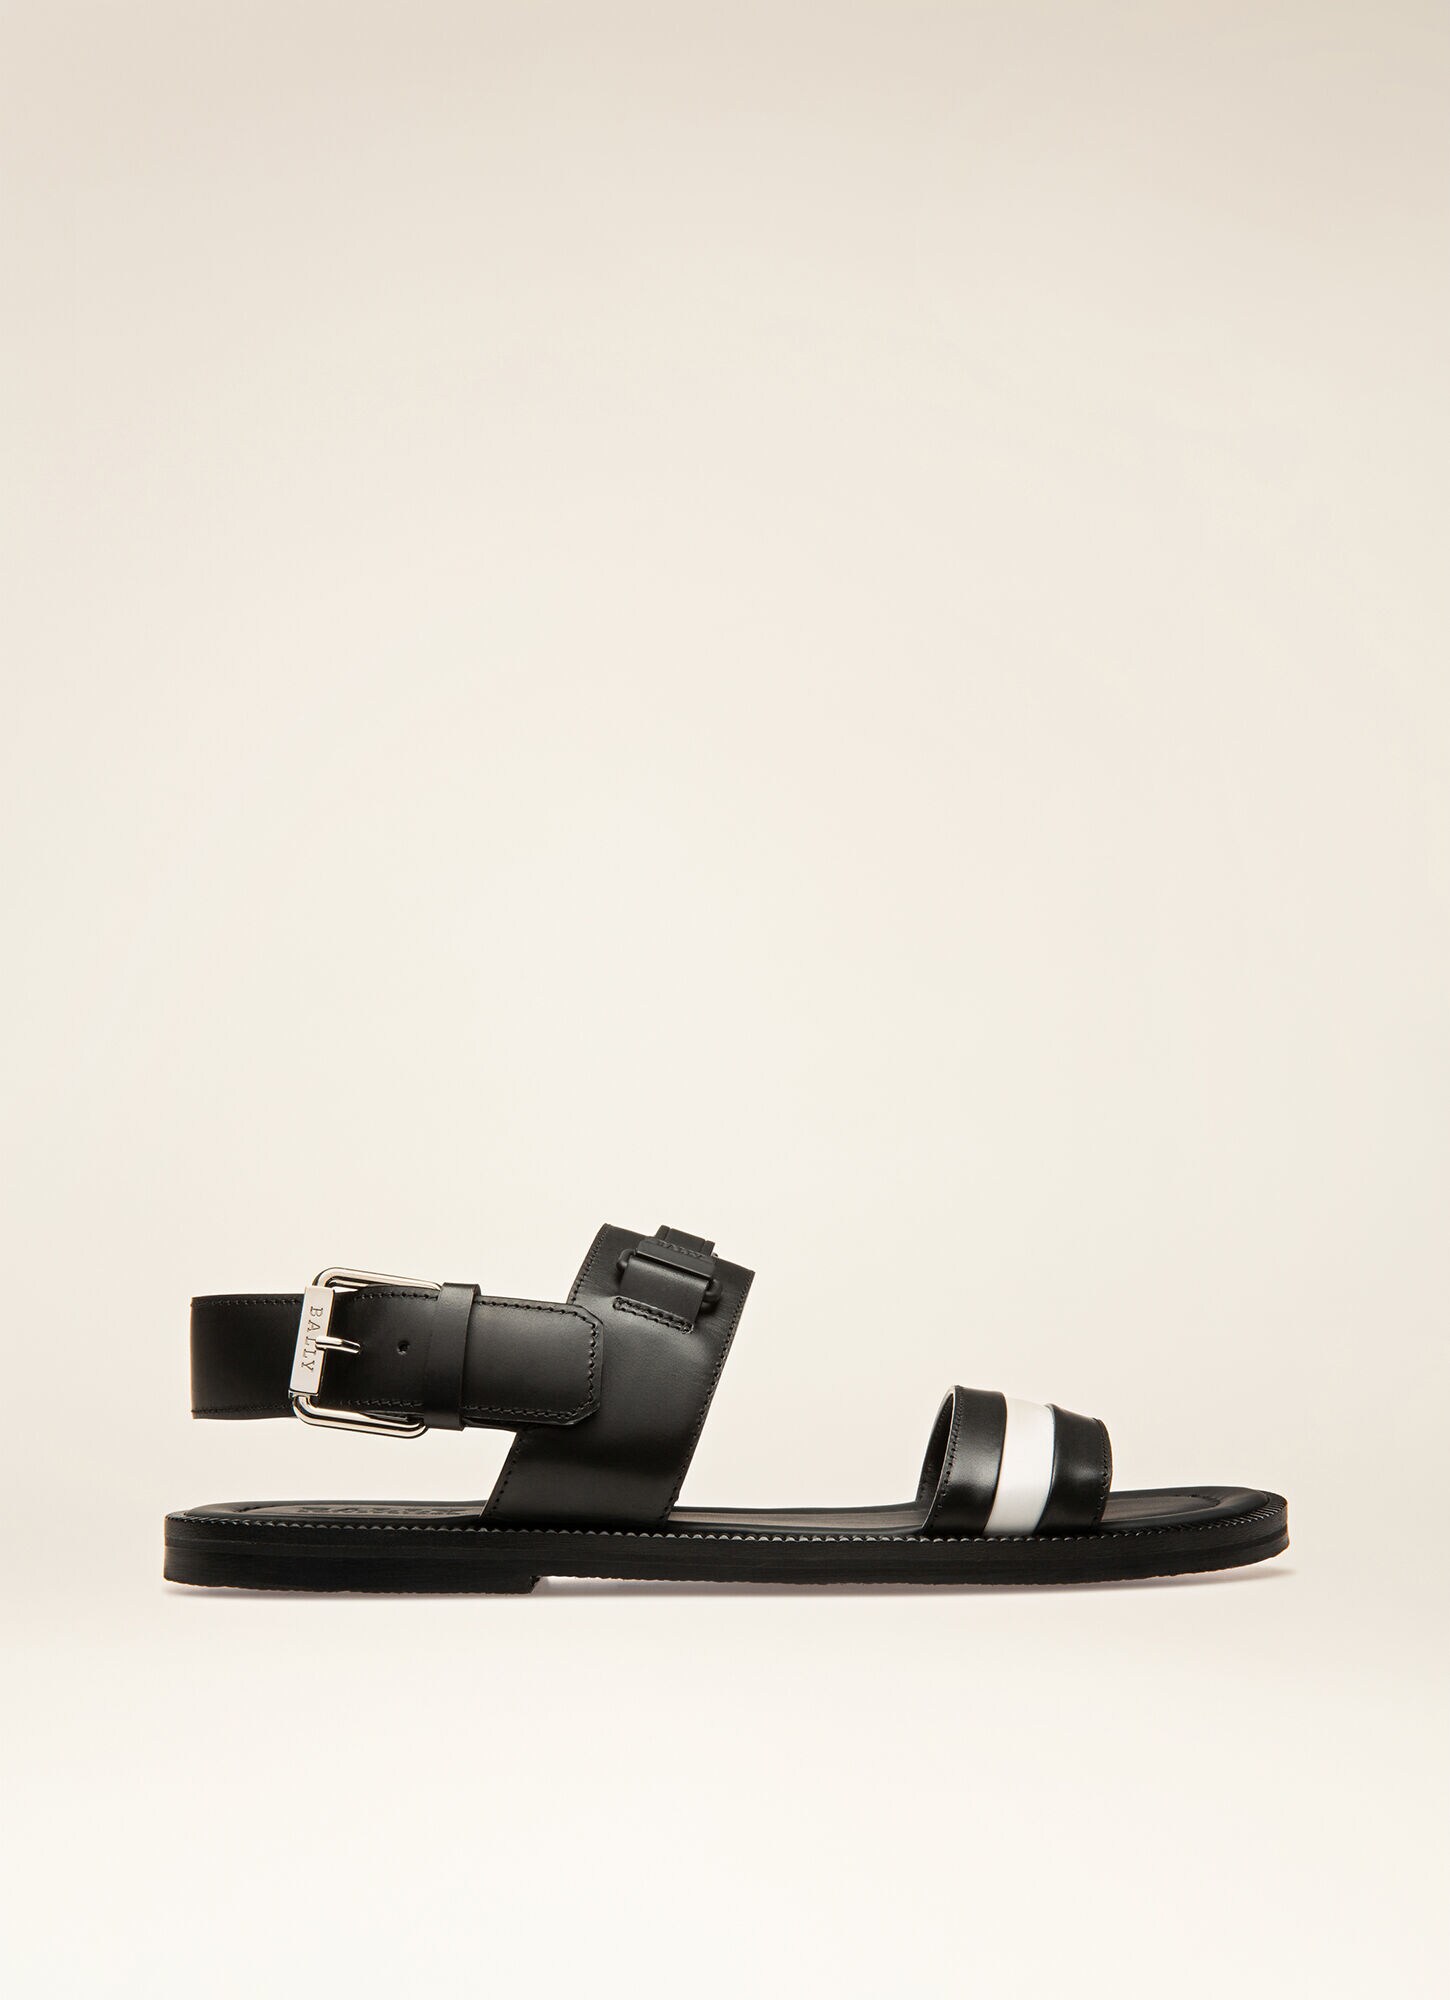 designer mens sandals uk